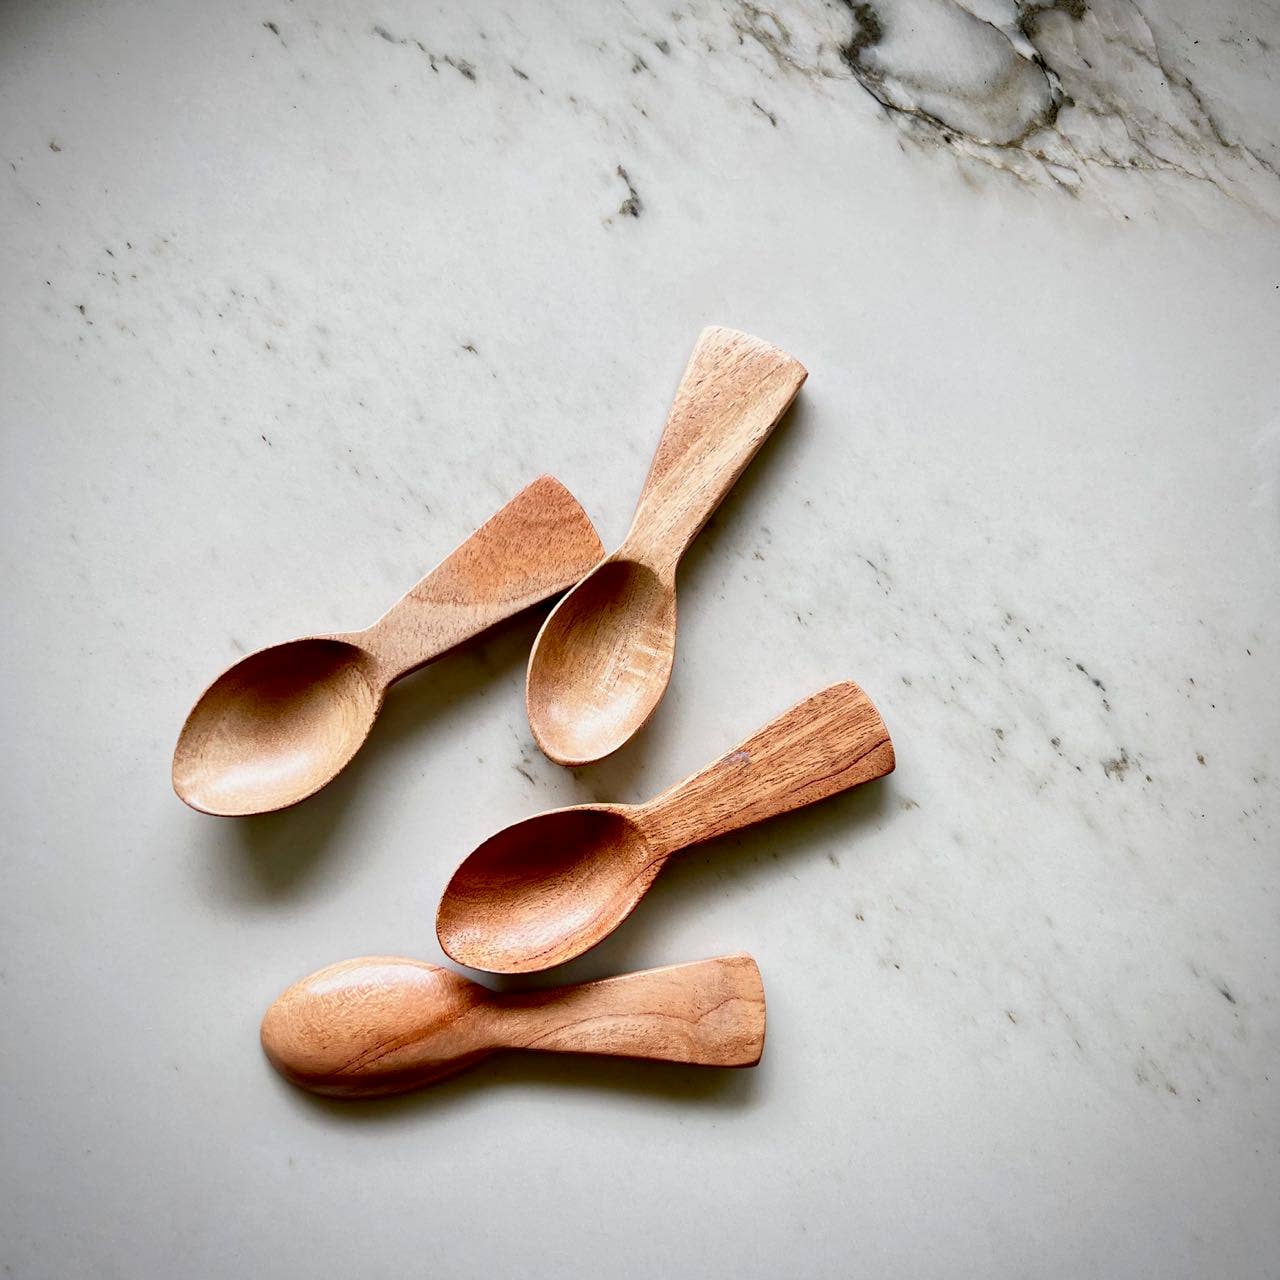 Tiny Wooden Spoon